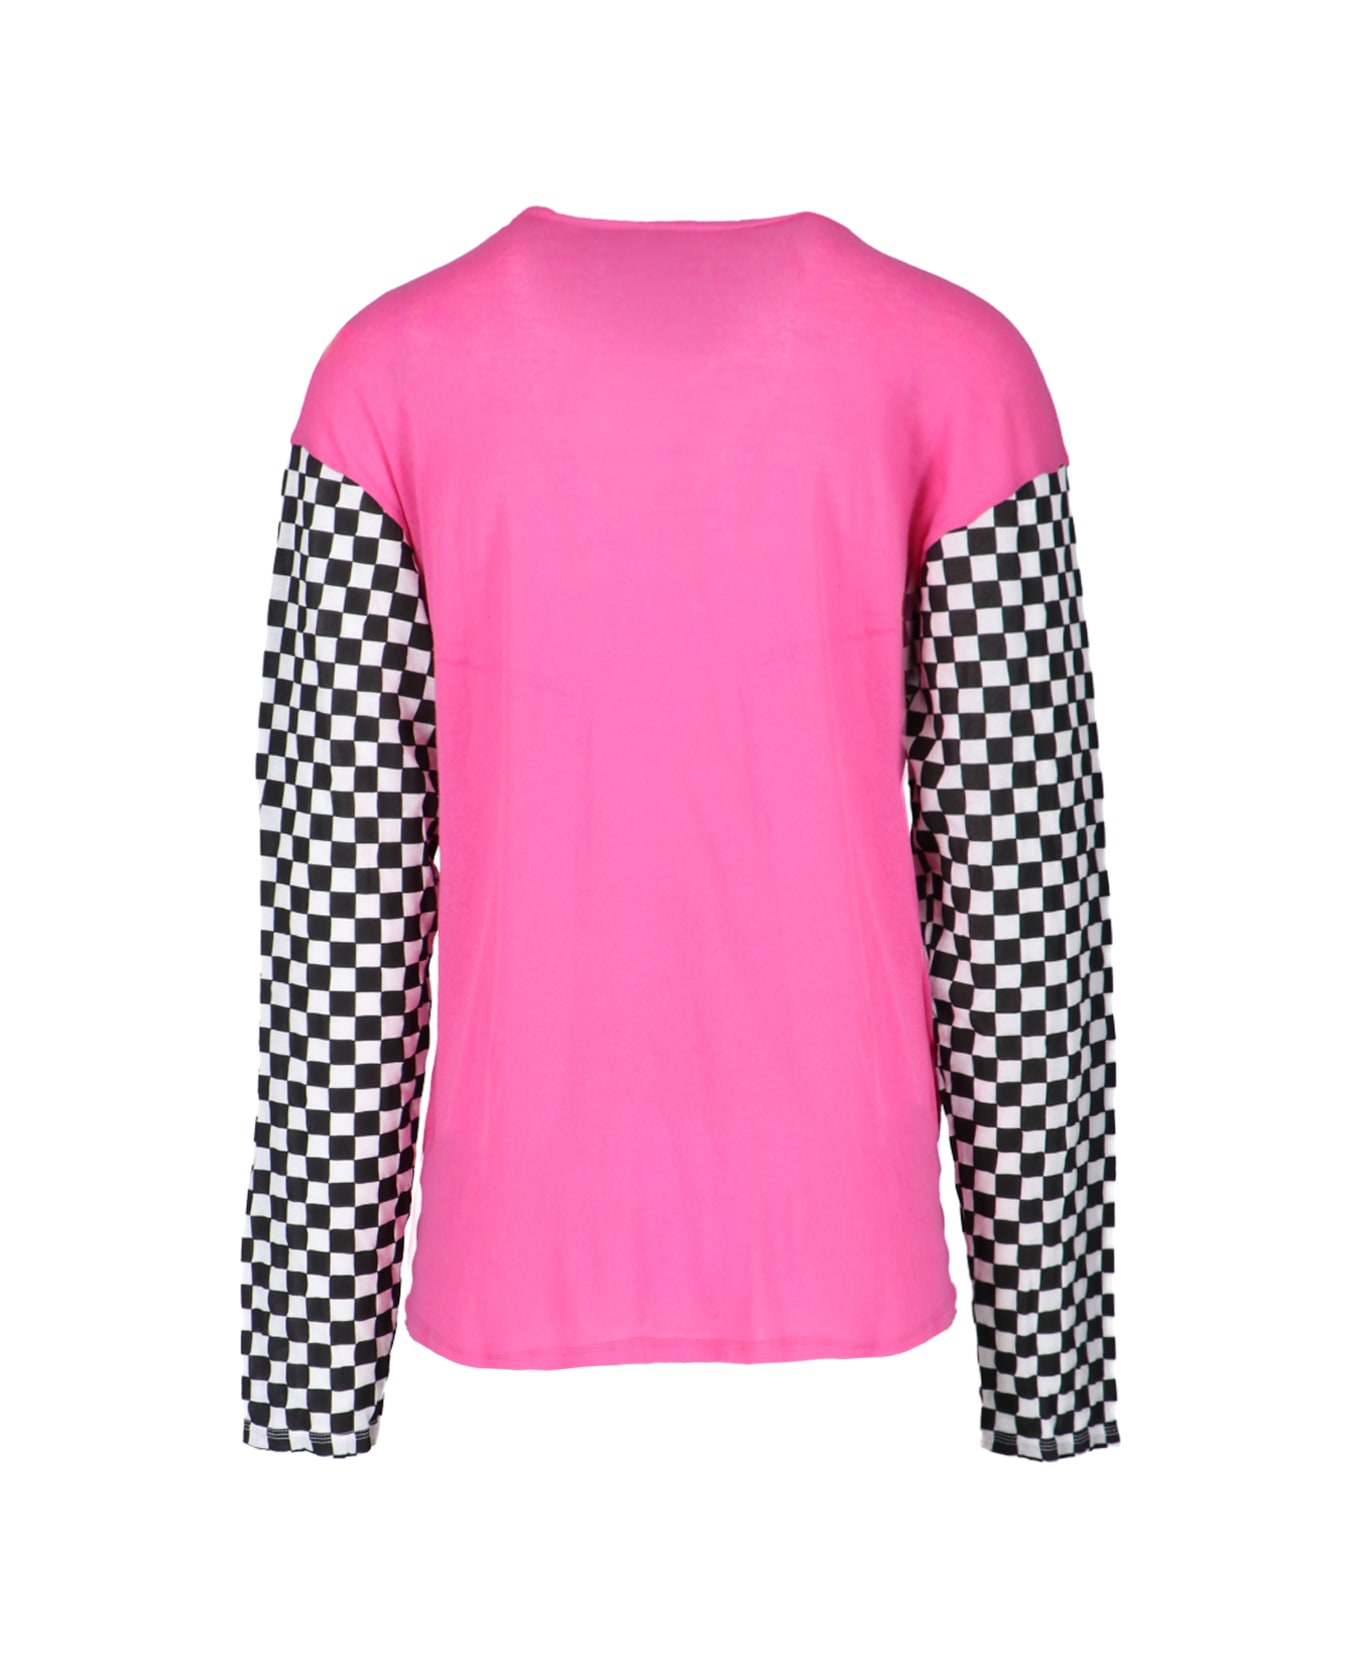 ERL Long Sleeve T-shirt - Pink